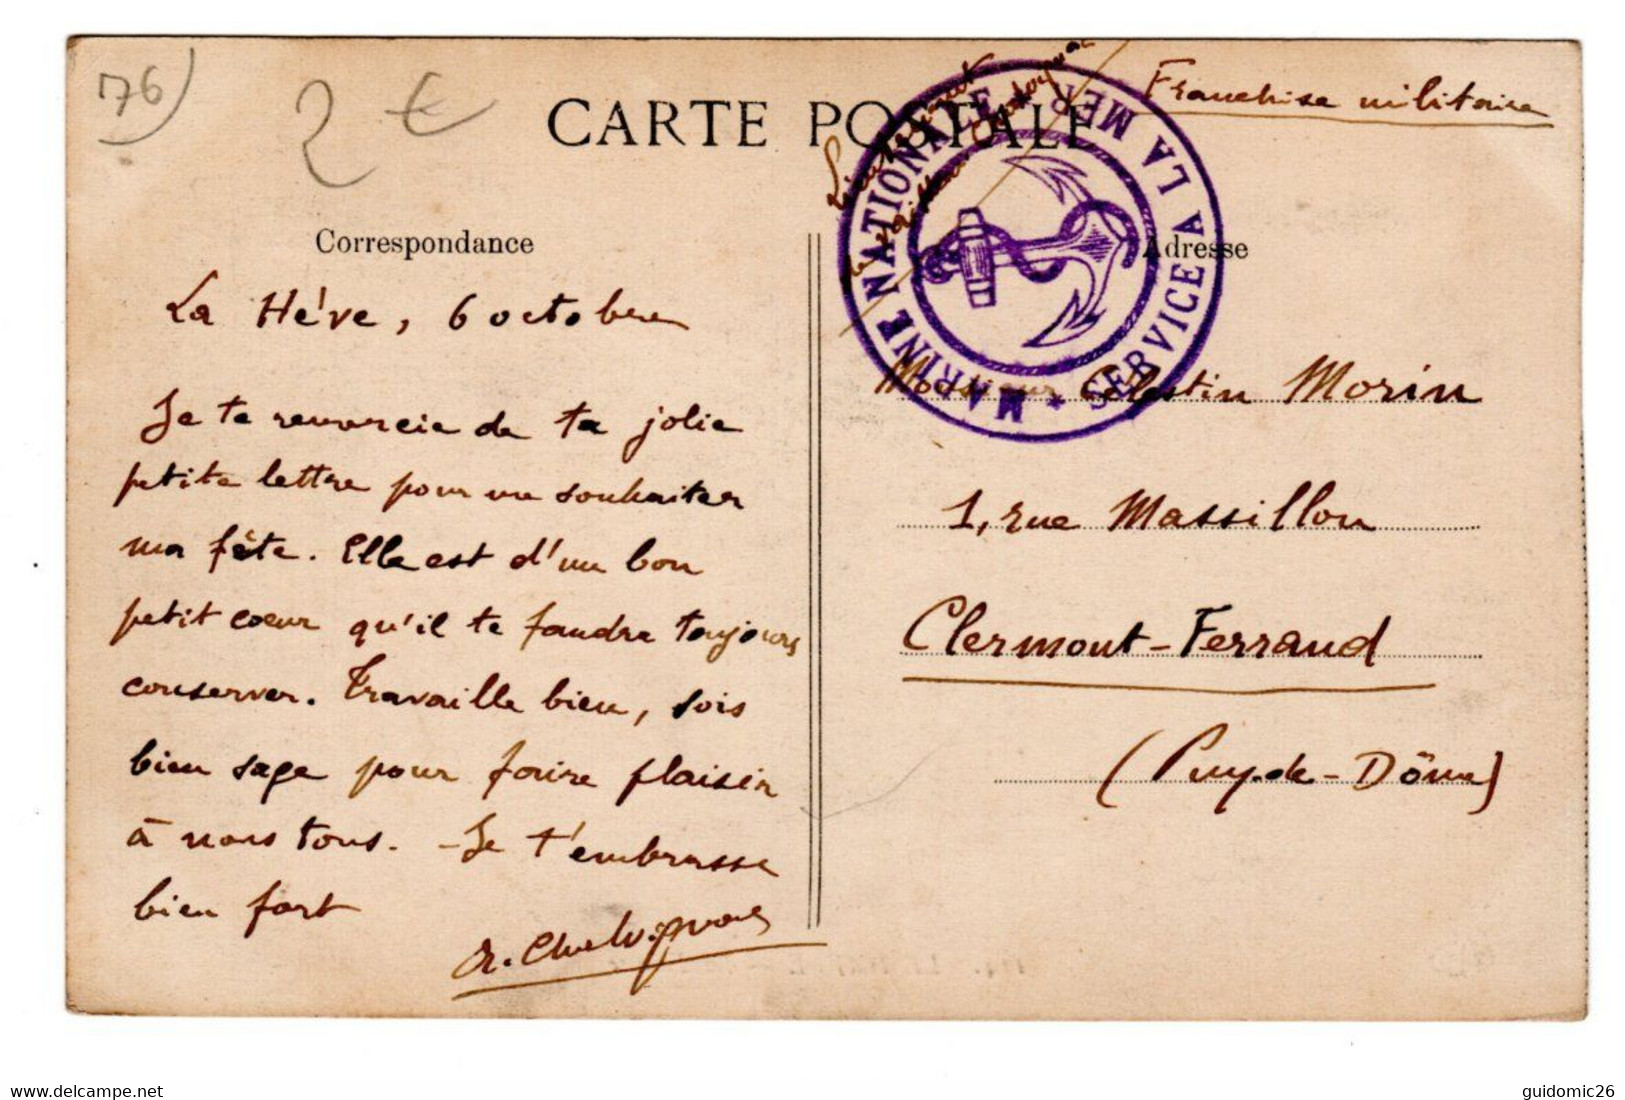 Le Havre Carte Postale Avec Tampons Marine Nationale Service à La Mer , Artillerie Du Front De Mer - 1877-1920: Periodo Semi Moderno